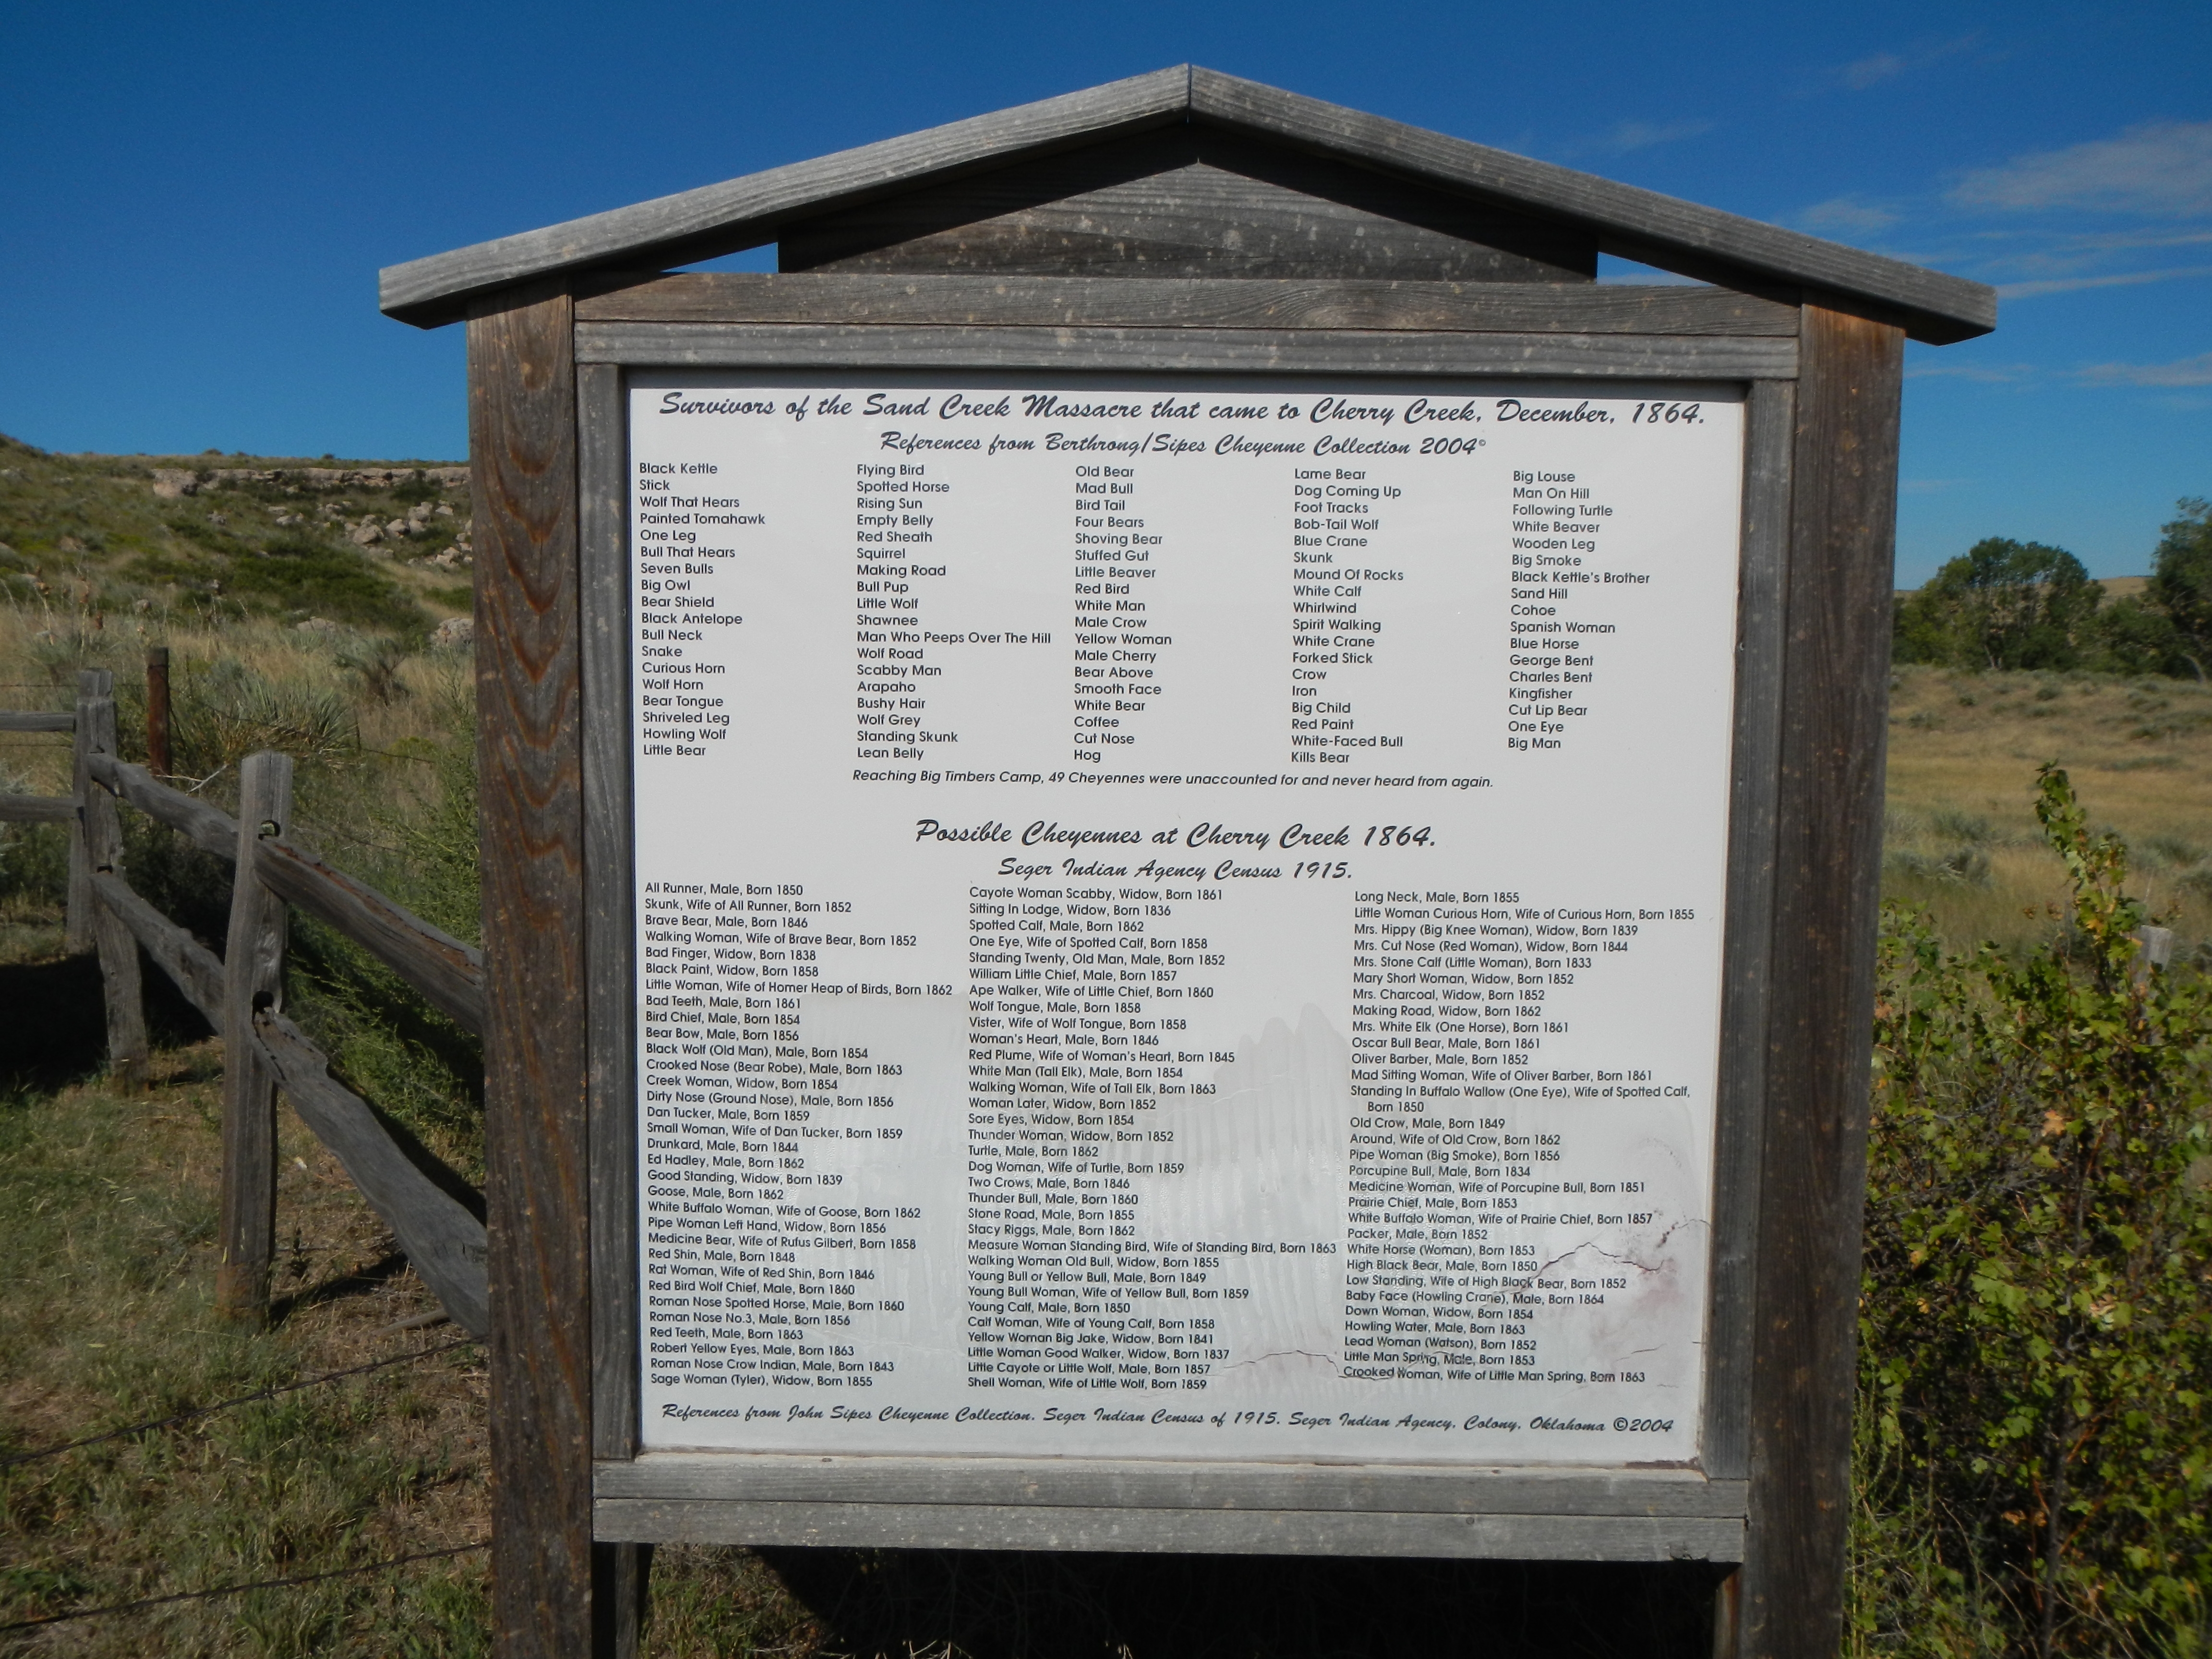 List of Sand Creek Survivors and Cheyennes at Cherry Creek, Christmas 1864